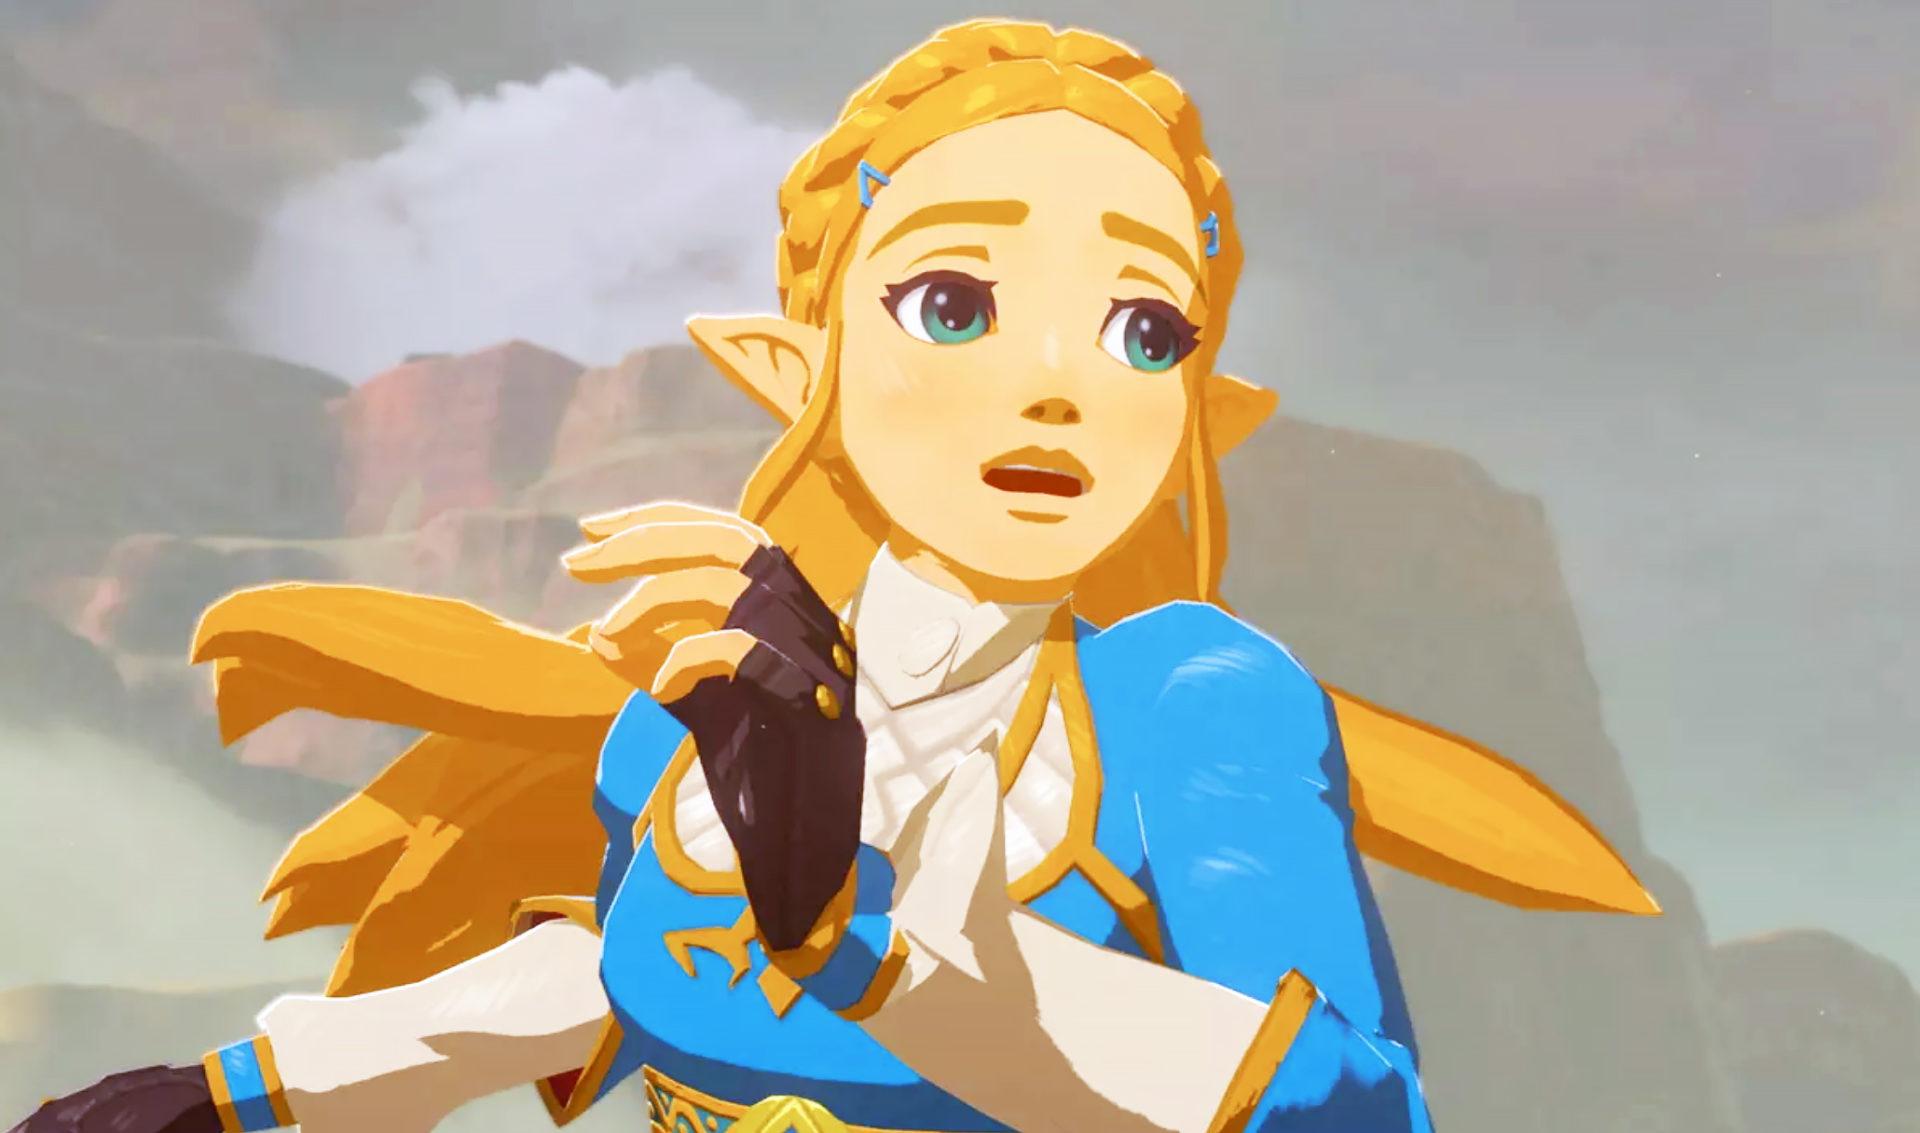 Screenshot of Zelda running in Nintendo Switch title Breath of the Wild.